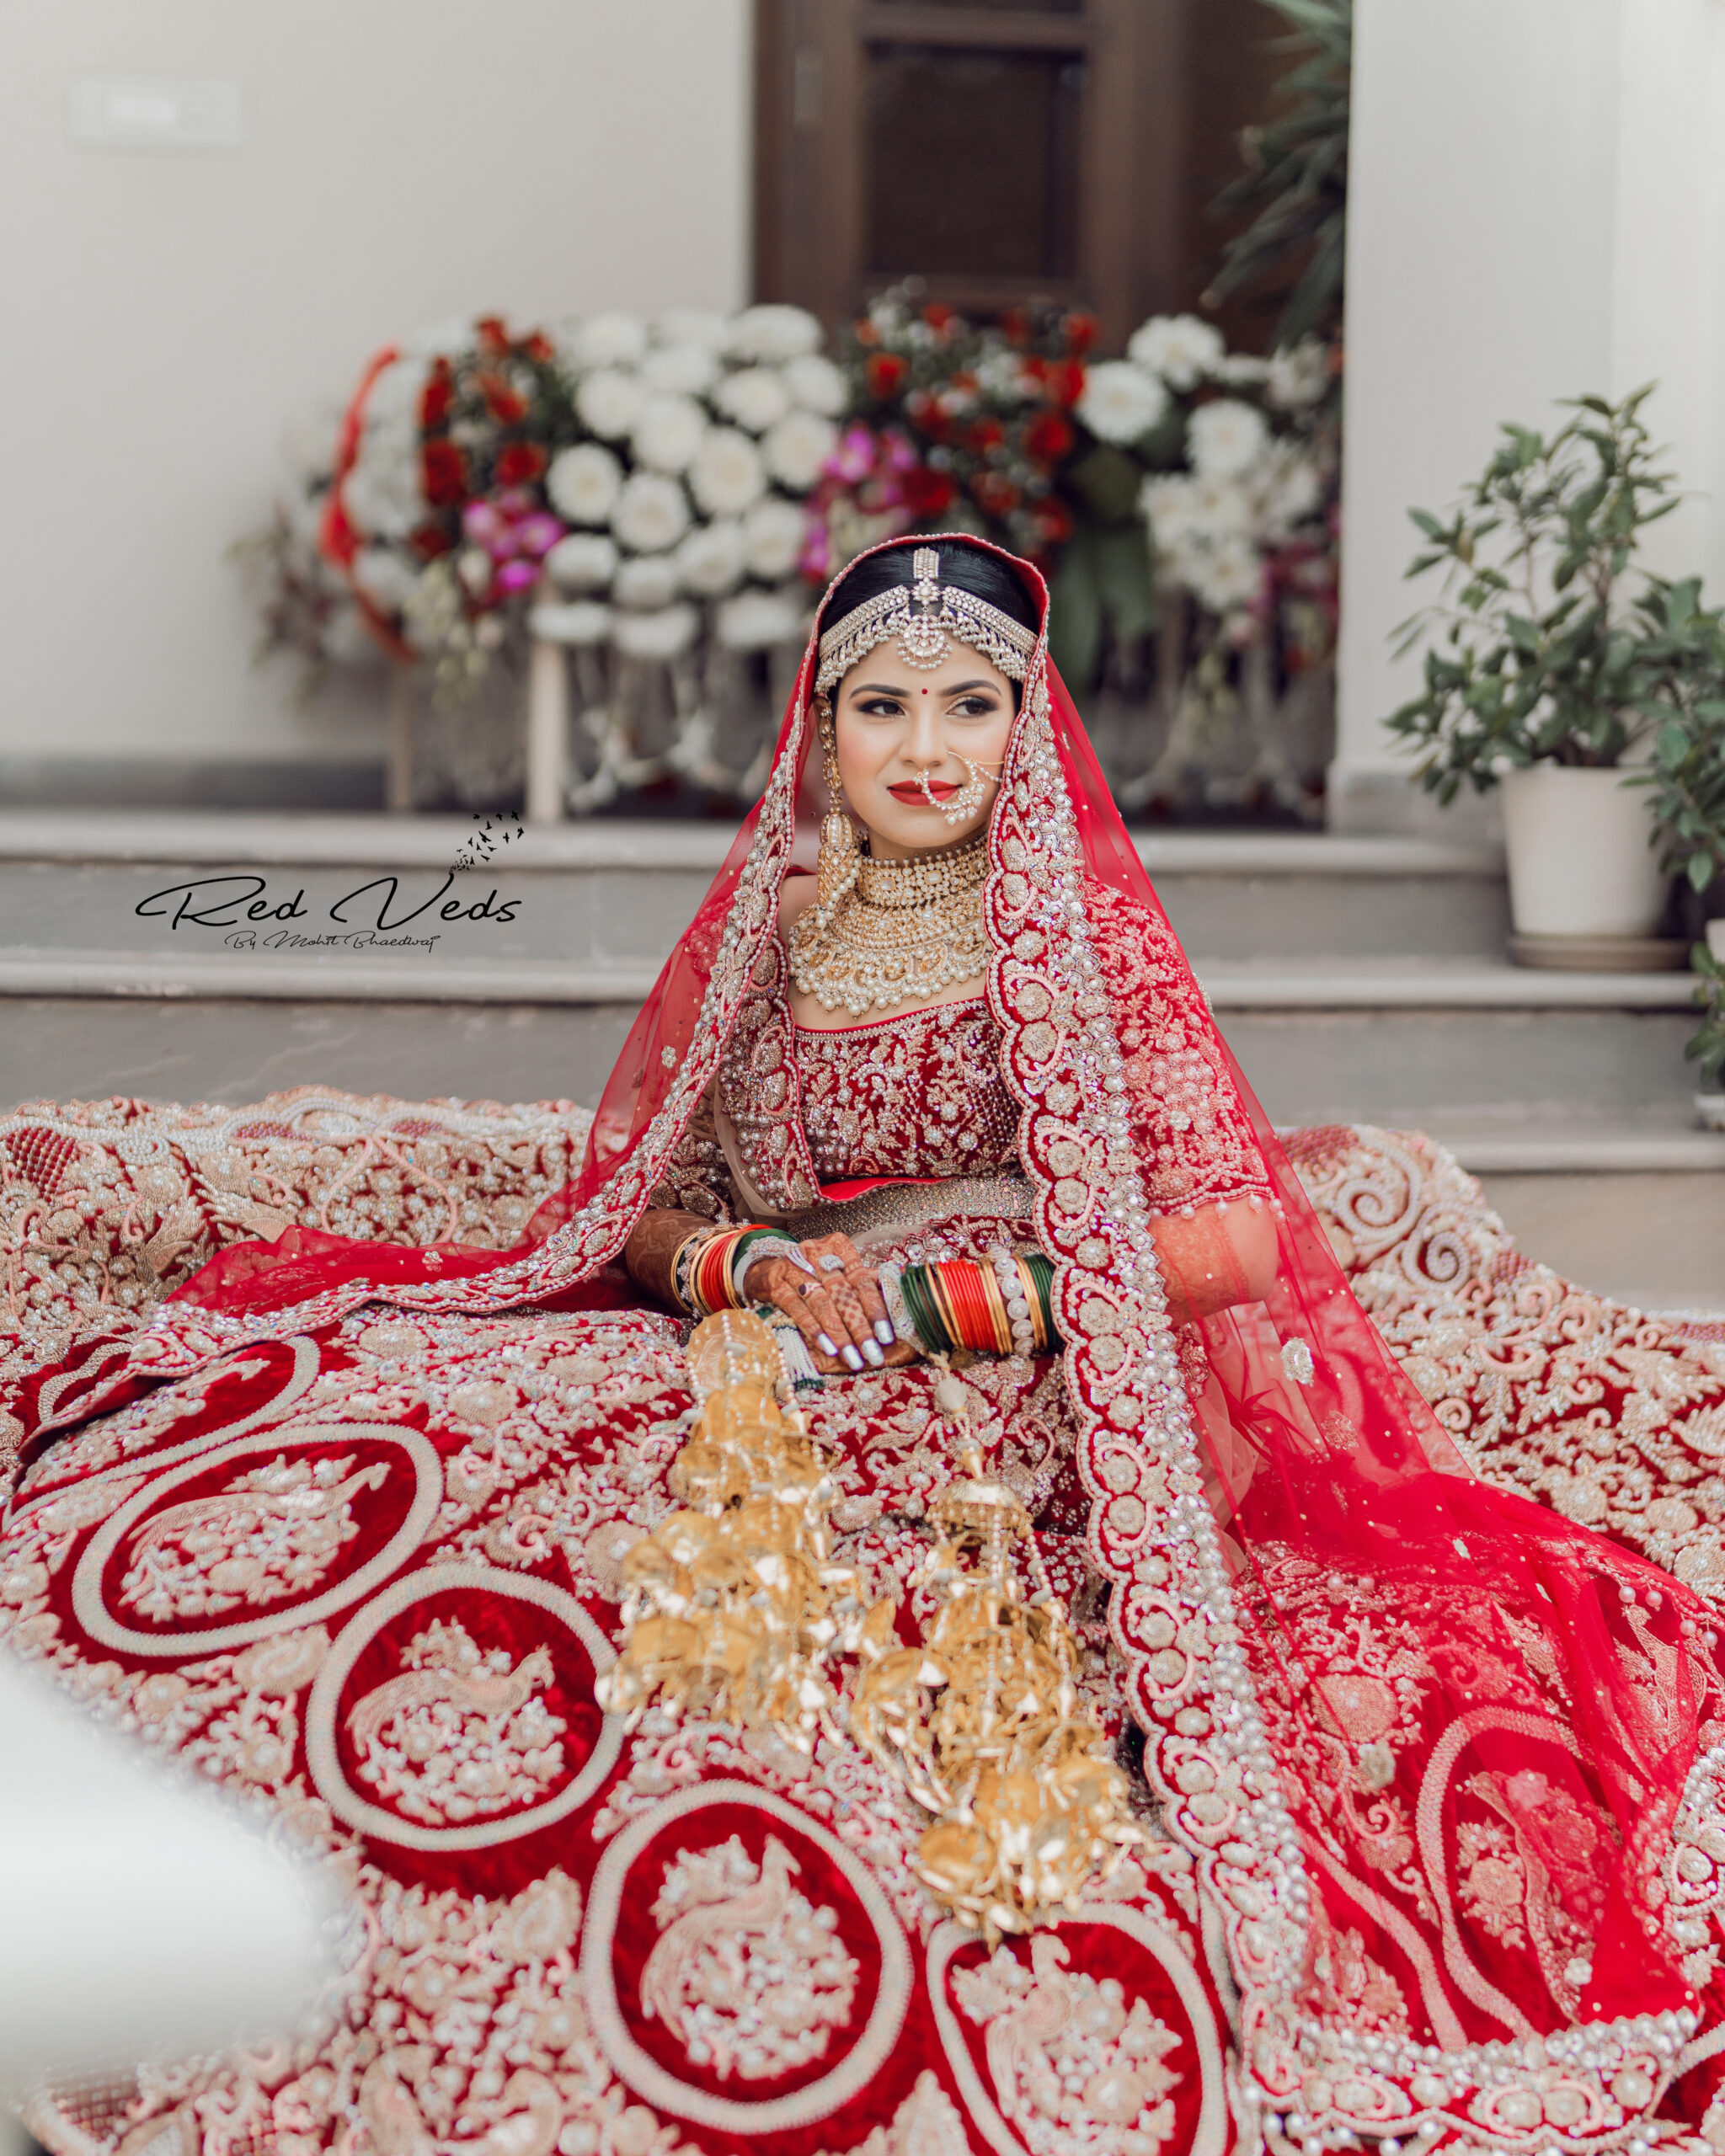 Bridal poses ideas | Wedding Photoshoot Poses For Bride | Wedding sarees  collection 2021 - YouTube